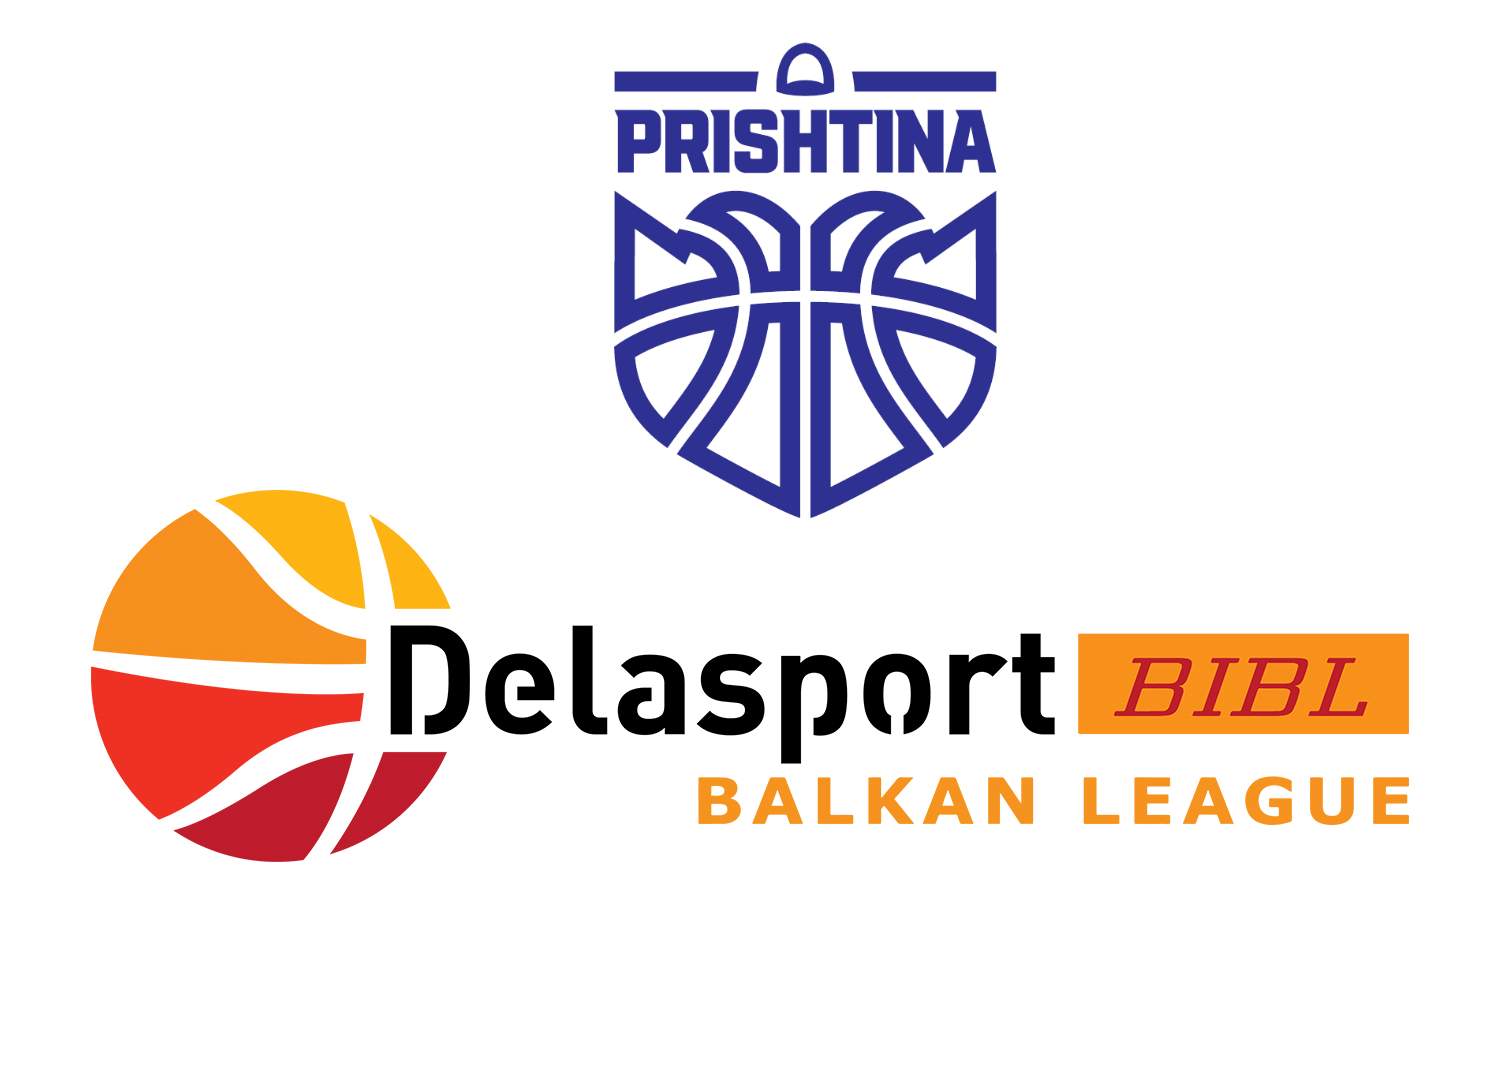 KB Sigal Prishtina sends official intent to join Delasport Balkan League